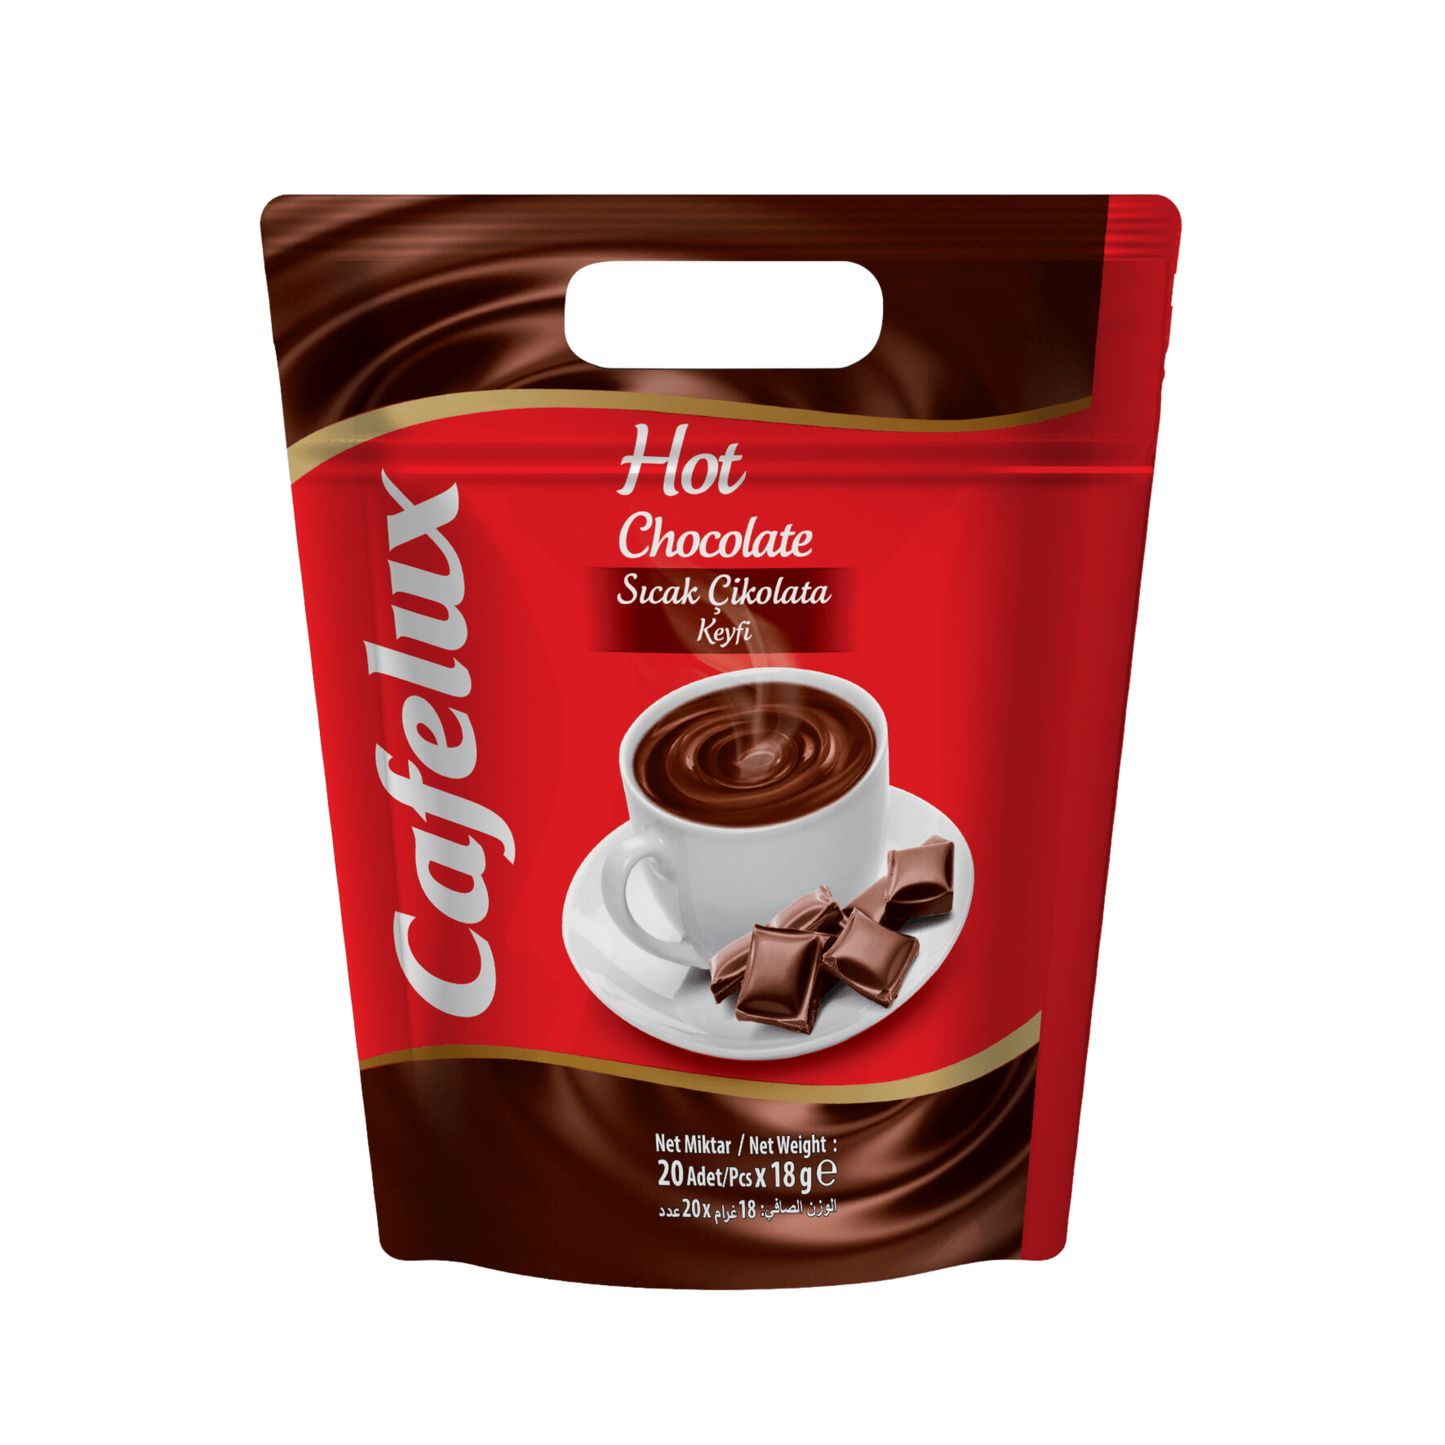 Cefelux Hot Chocolate - WhiteOak Online 